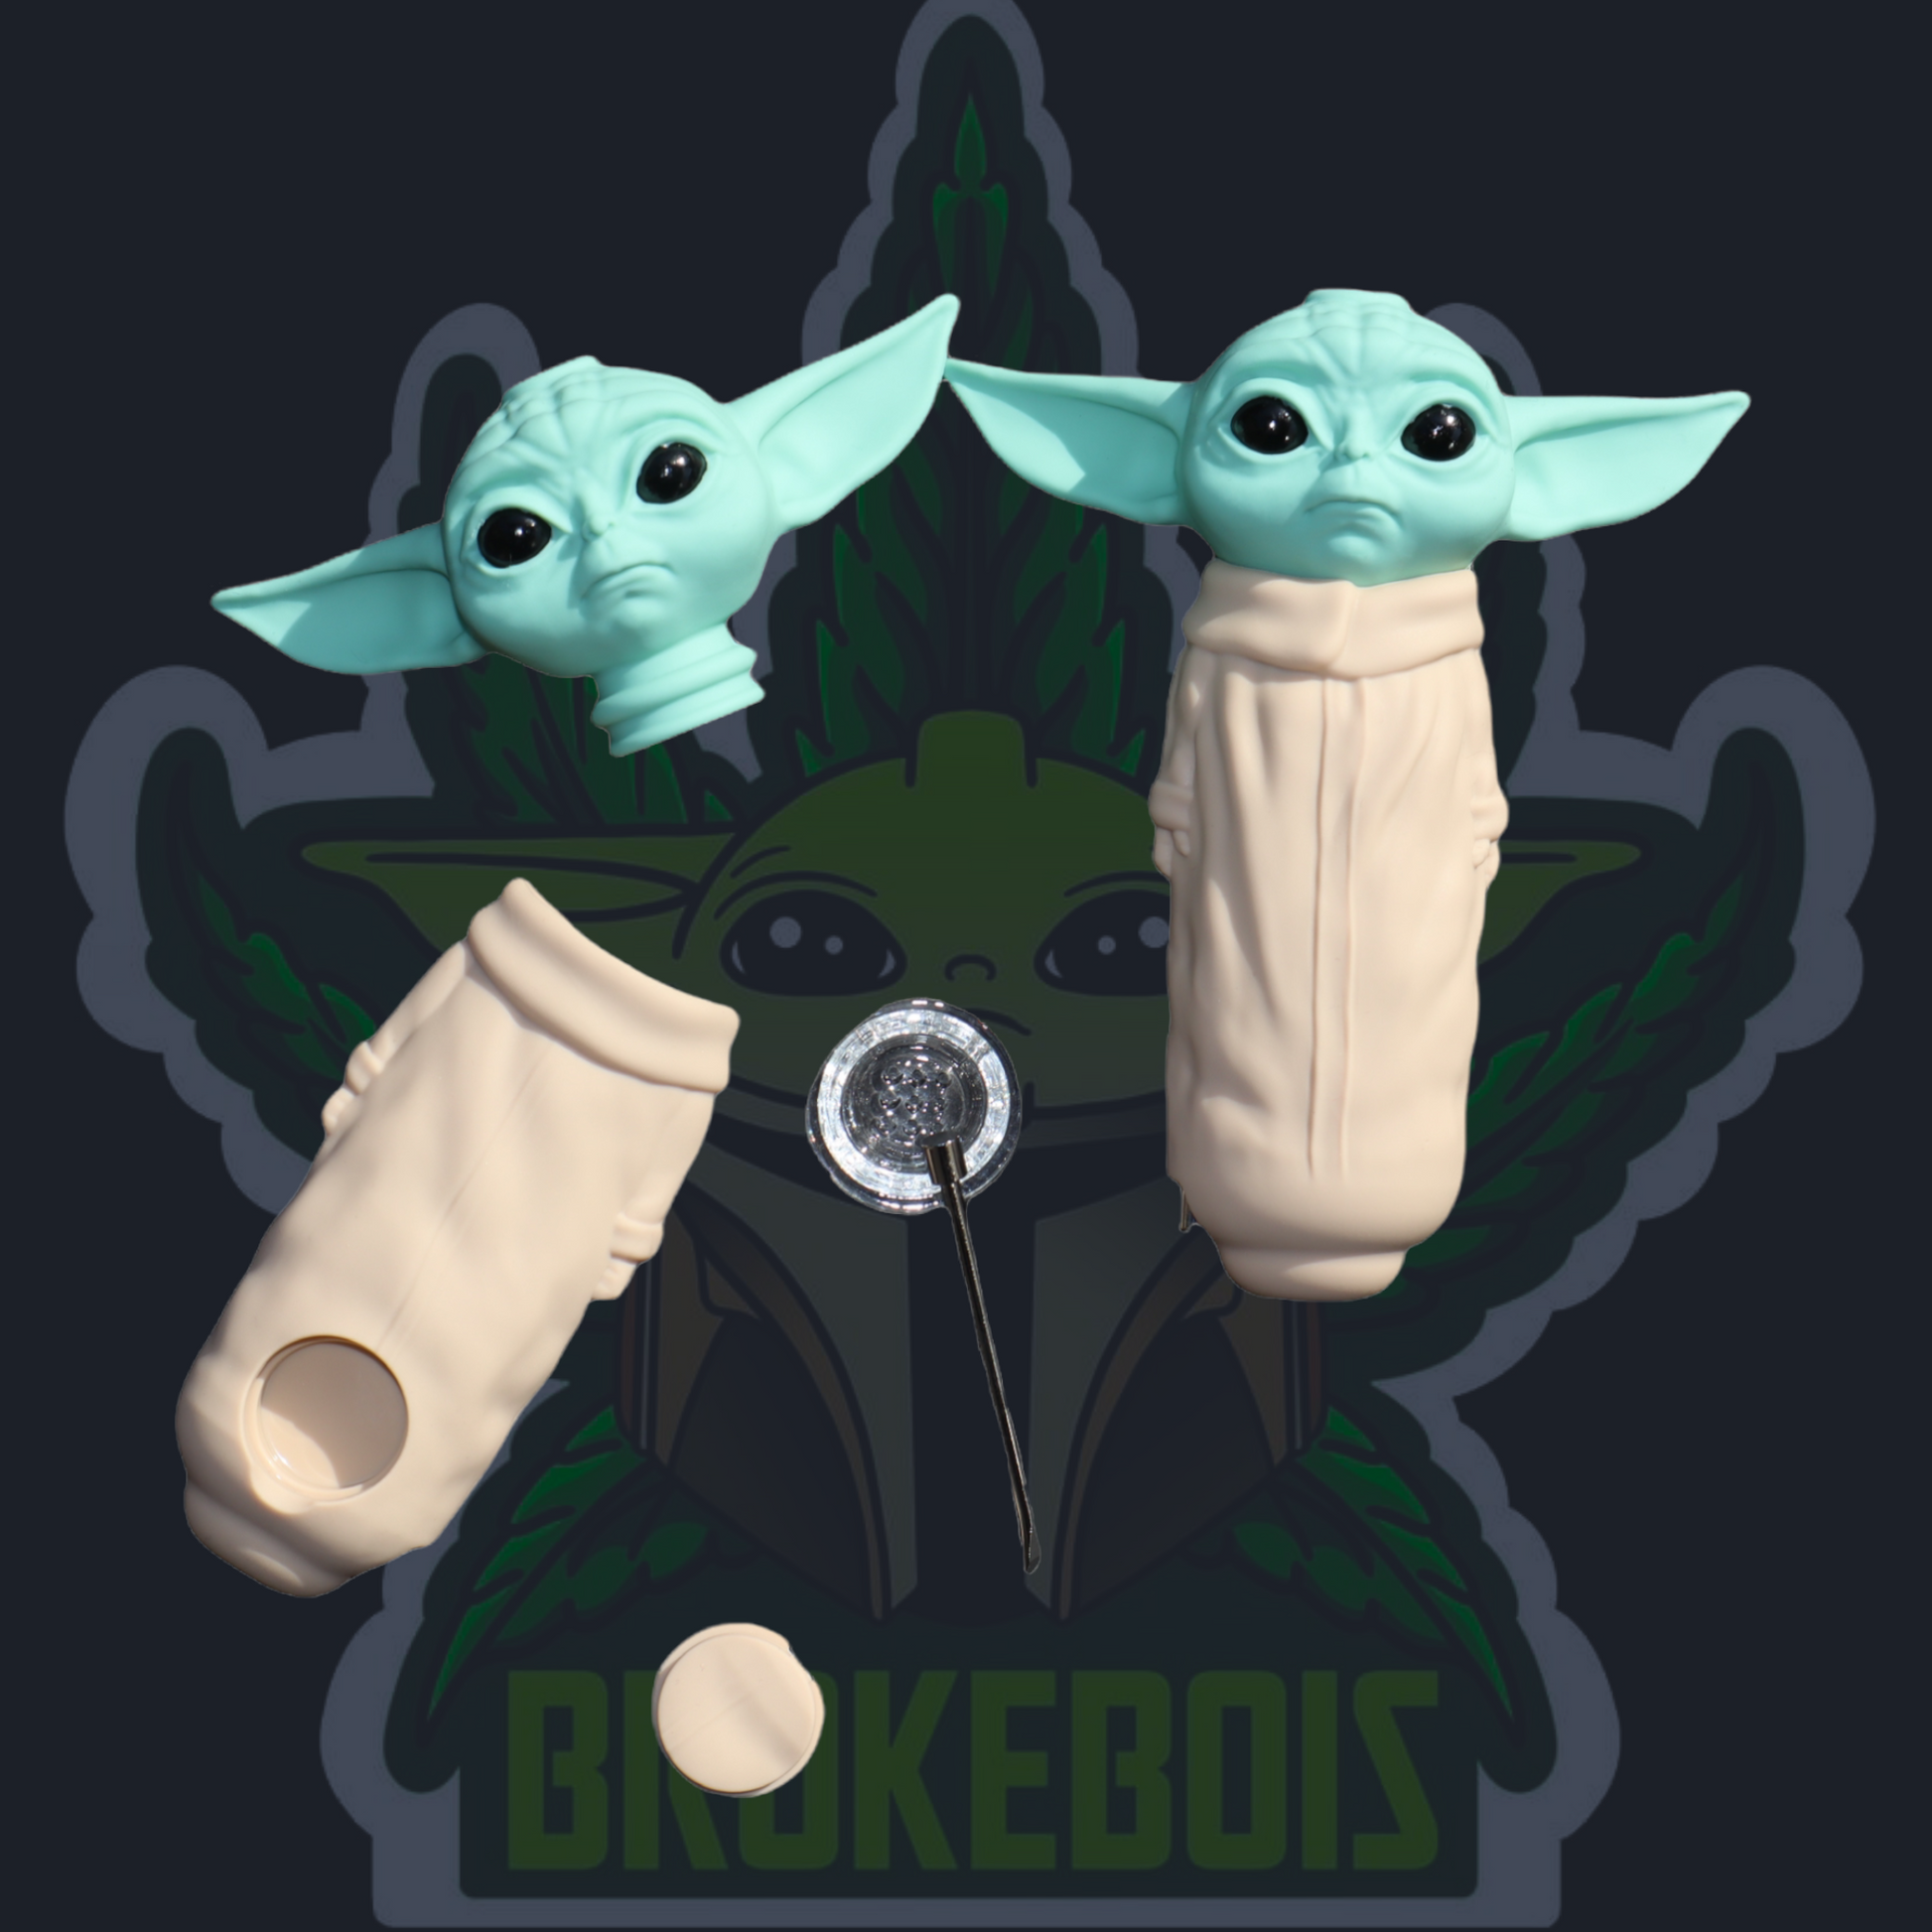 Star Wars baby Yoda pipe